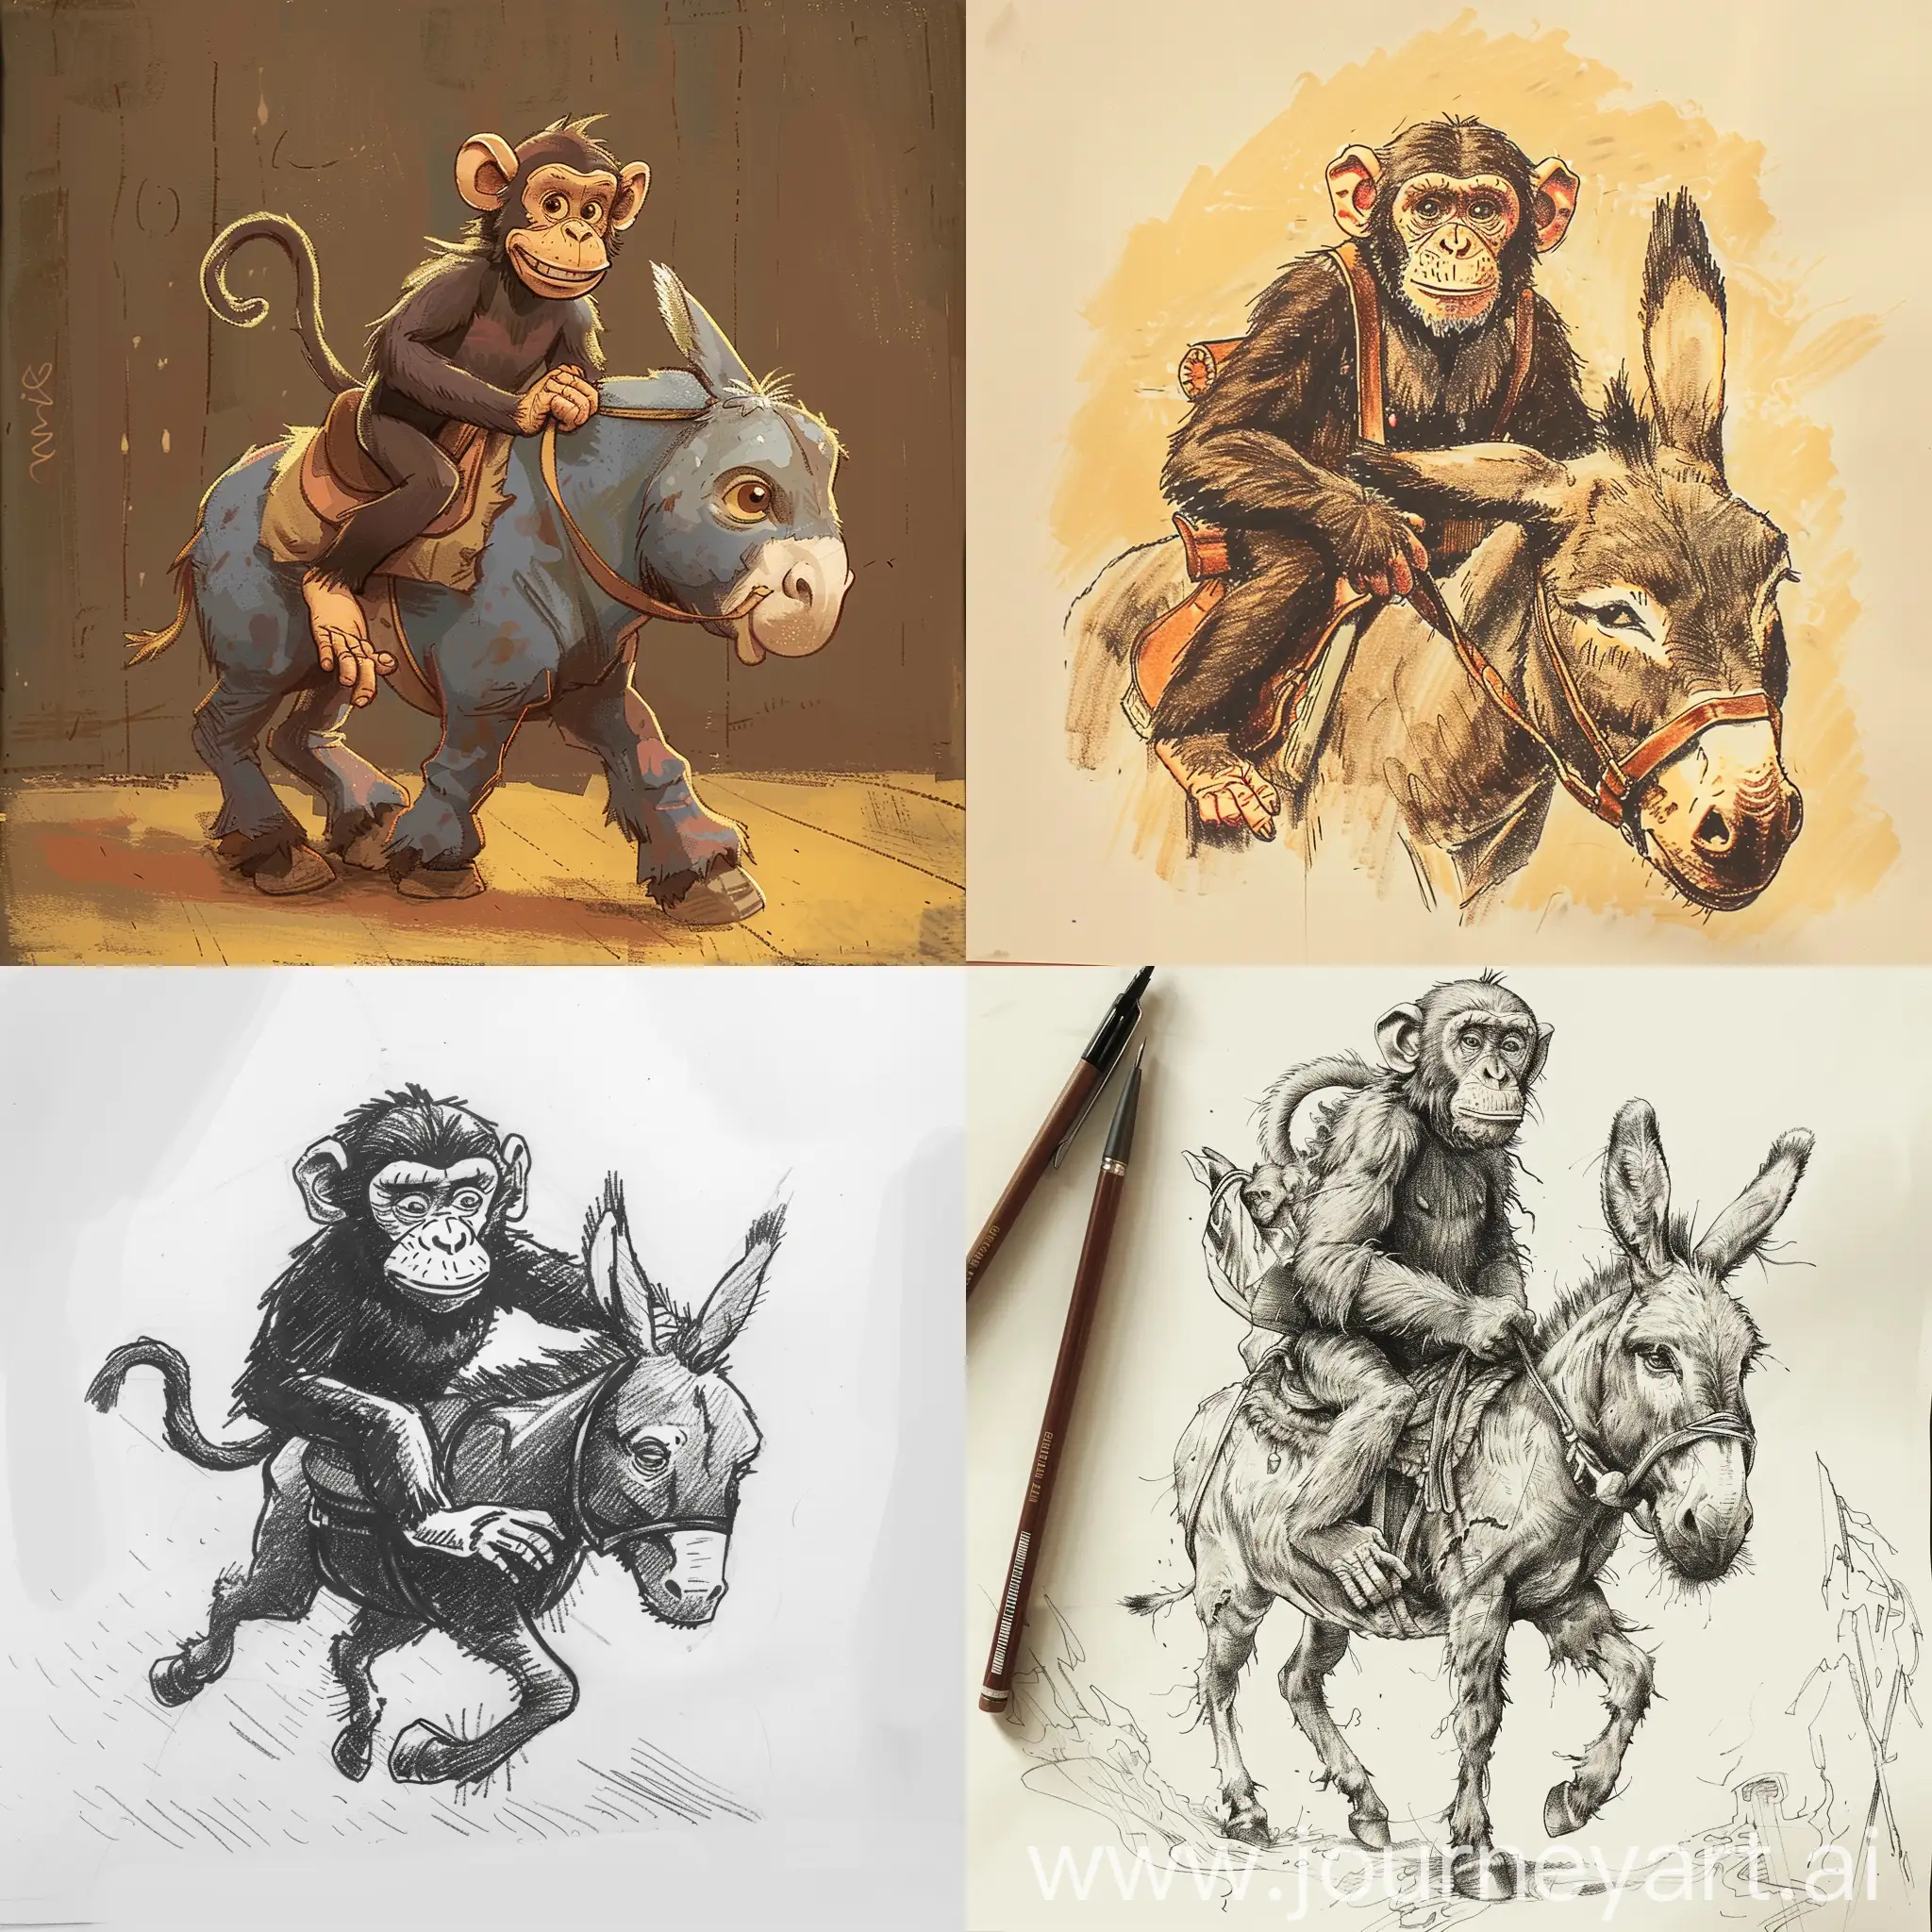 Playful-Monkey-Riding-a-Donkey